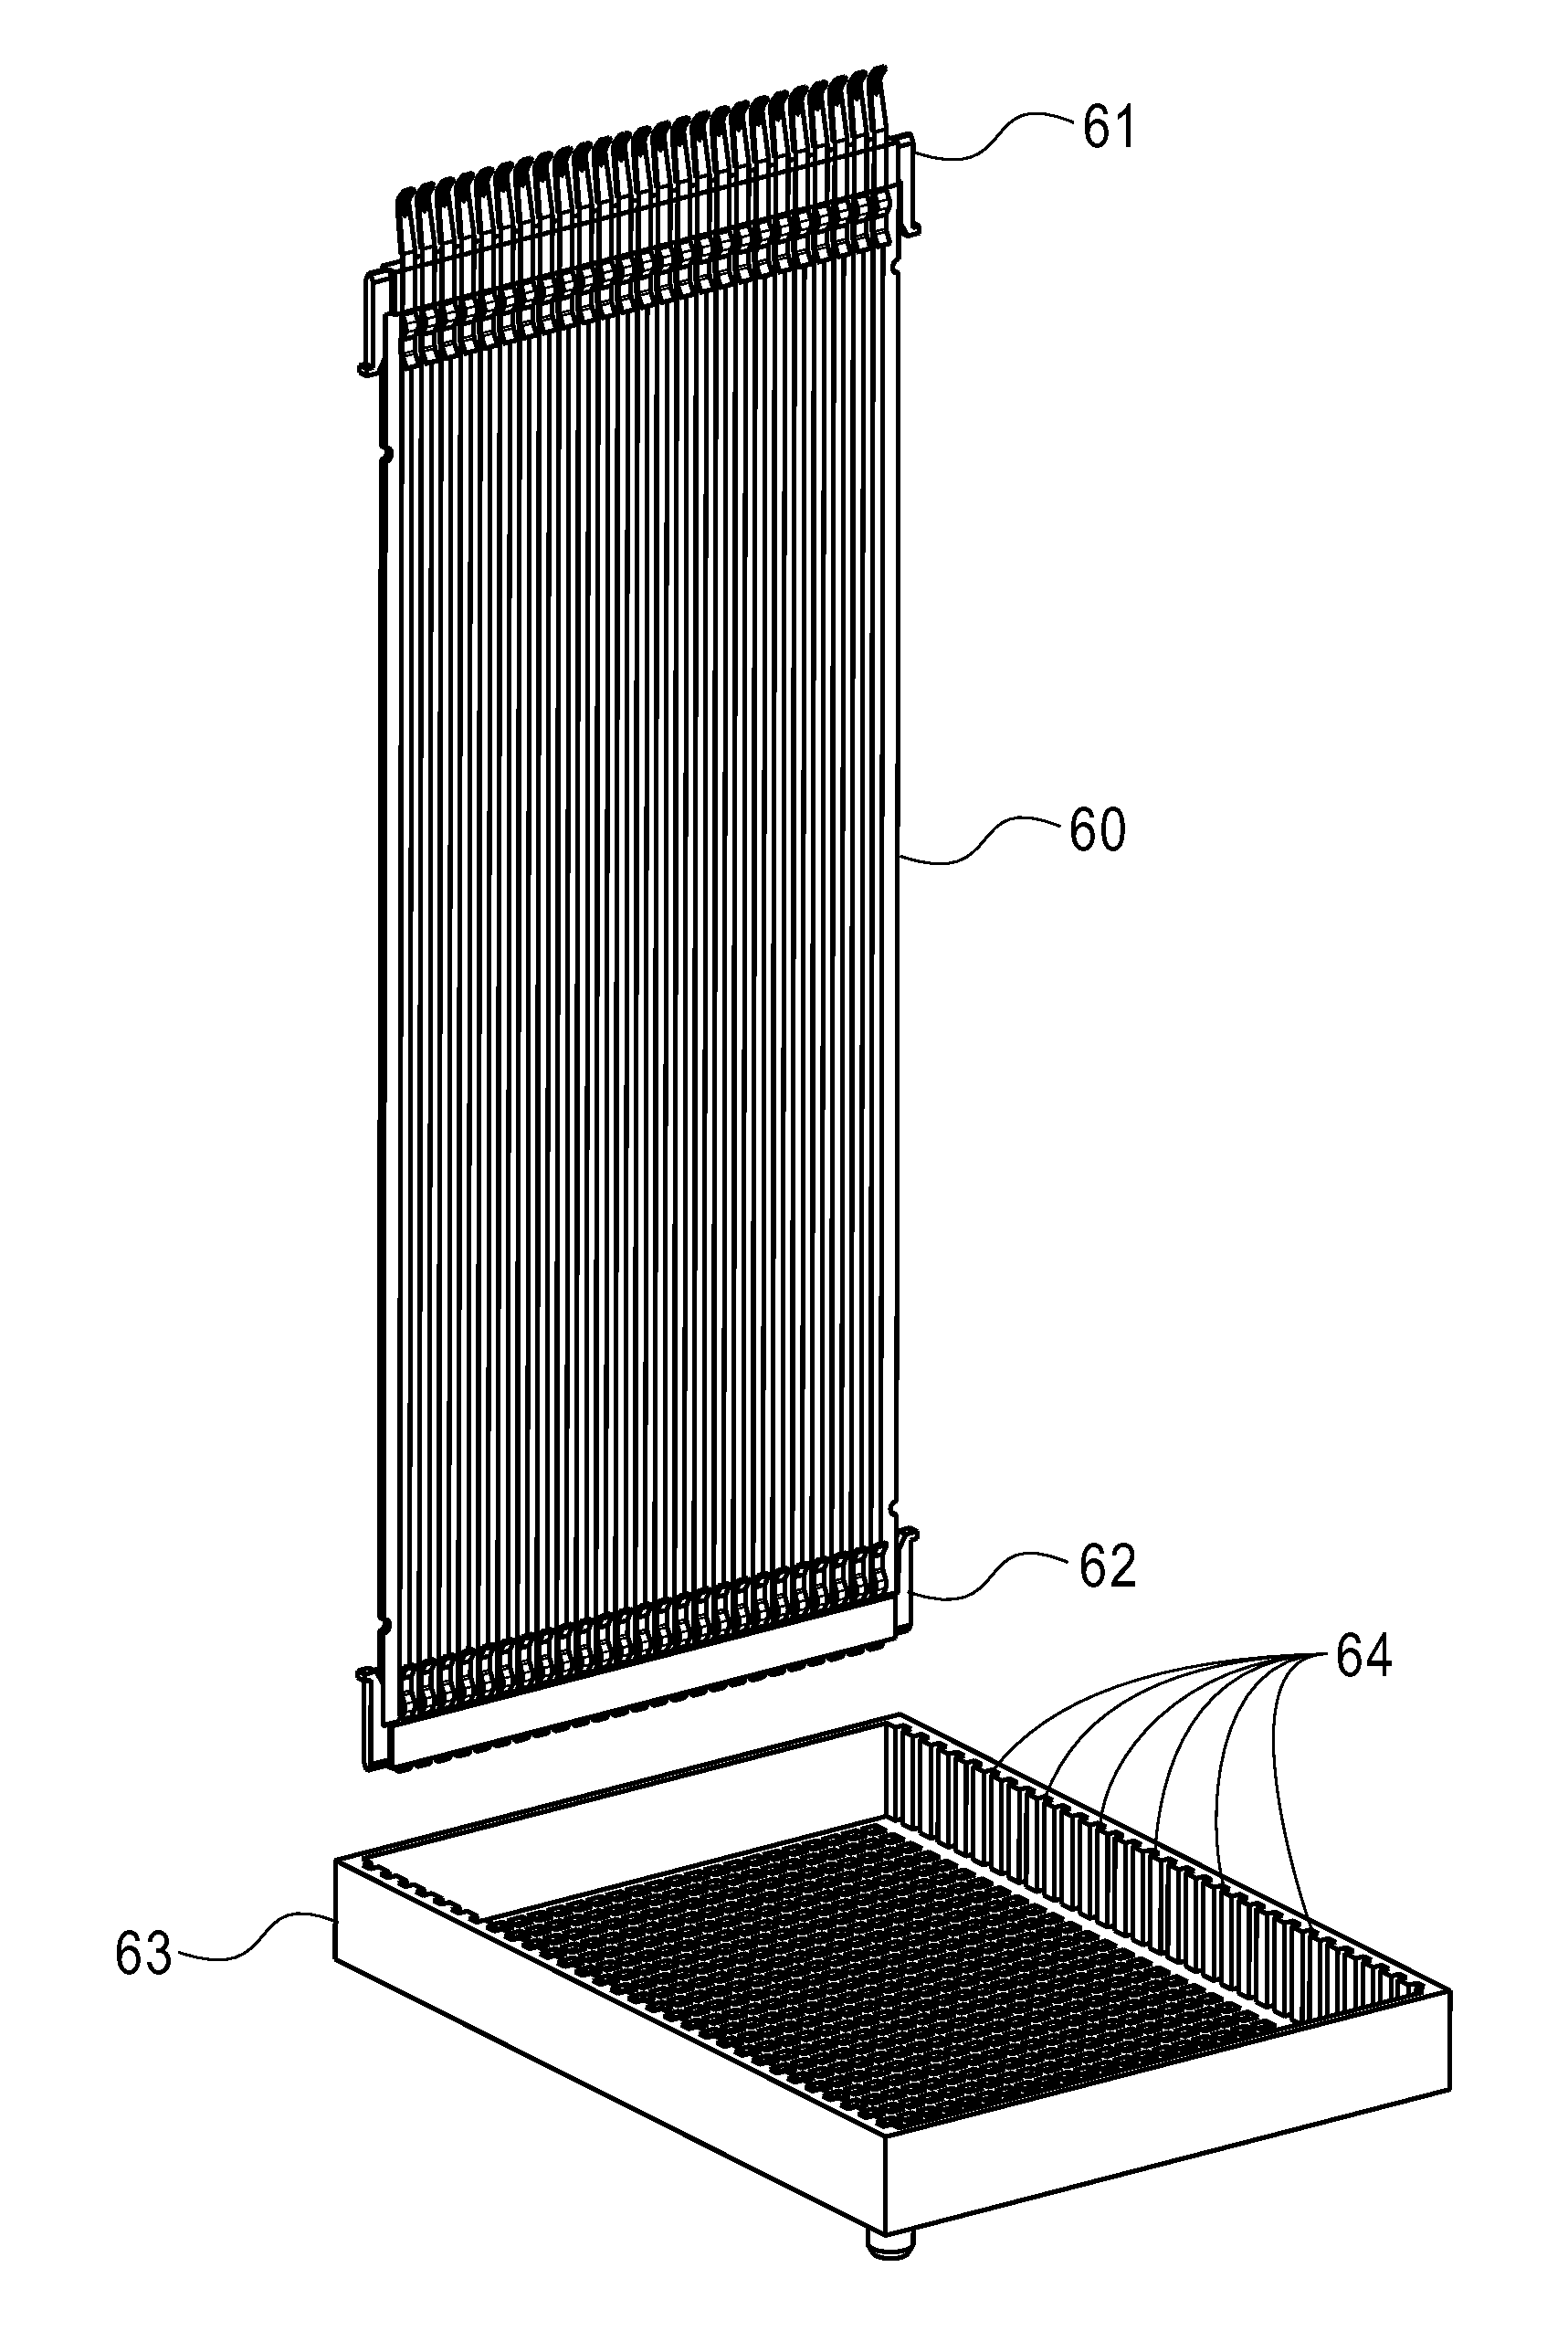 Tall mezzanine connector